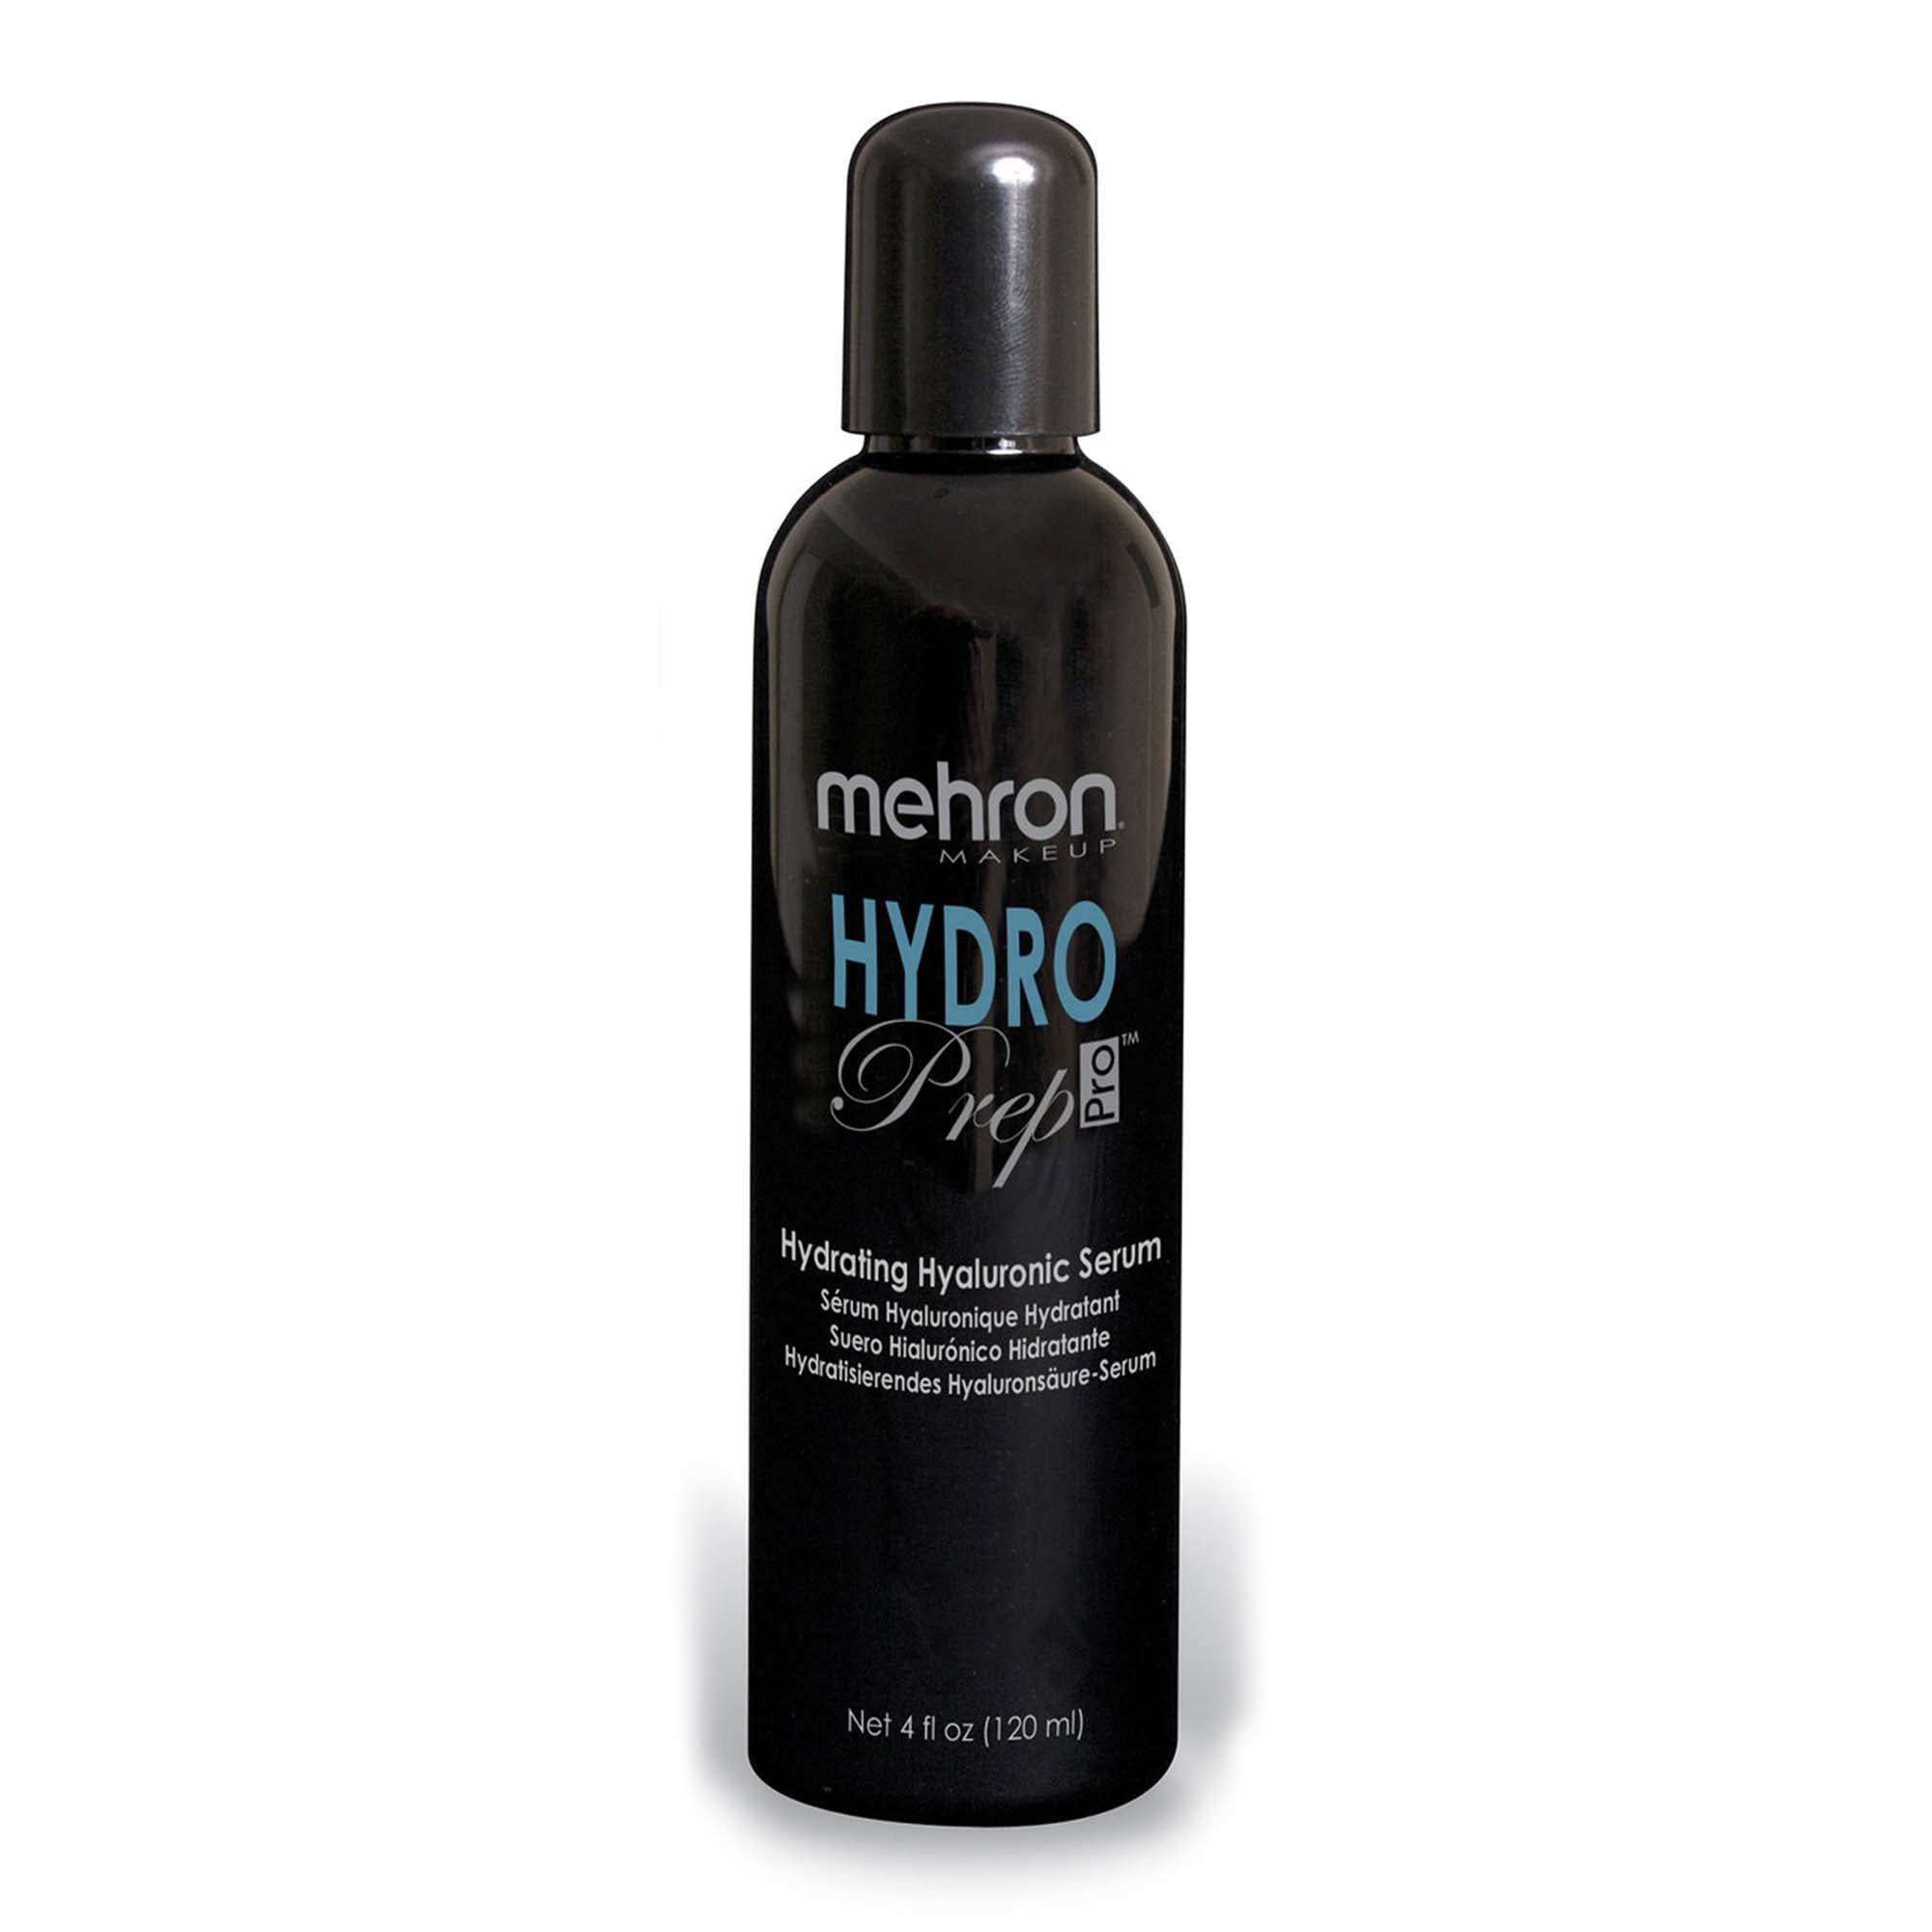 Mehron Hydro Prep Pro, Hydrating Hyaluronic Serium, 120 ml, 1 Count